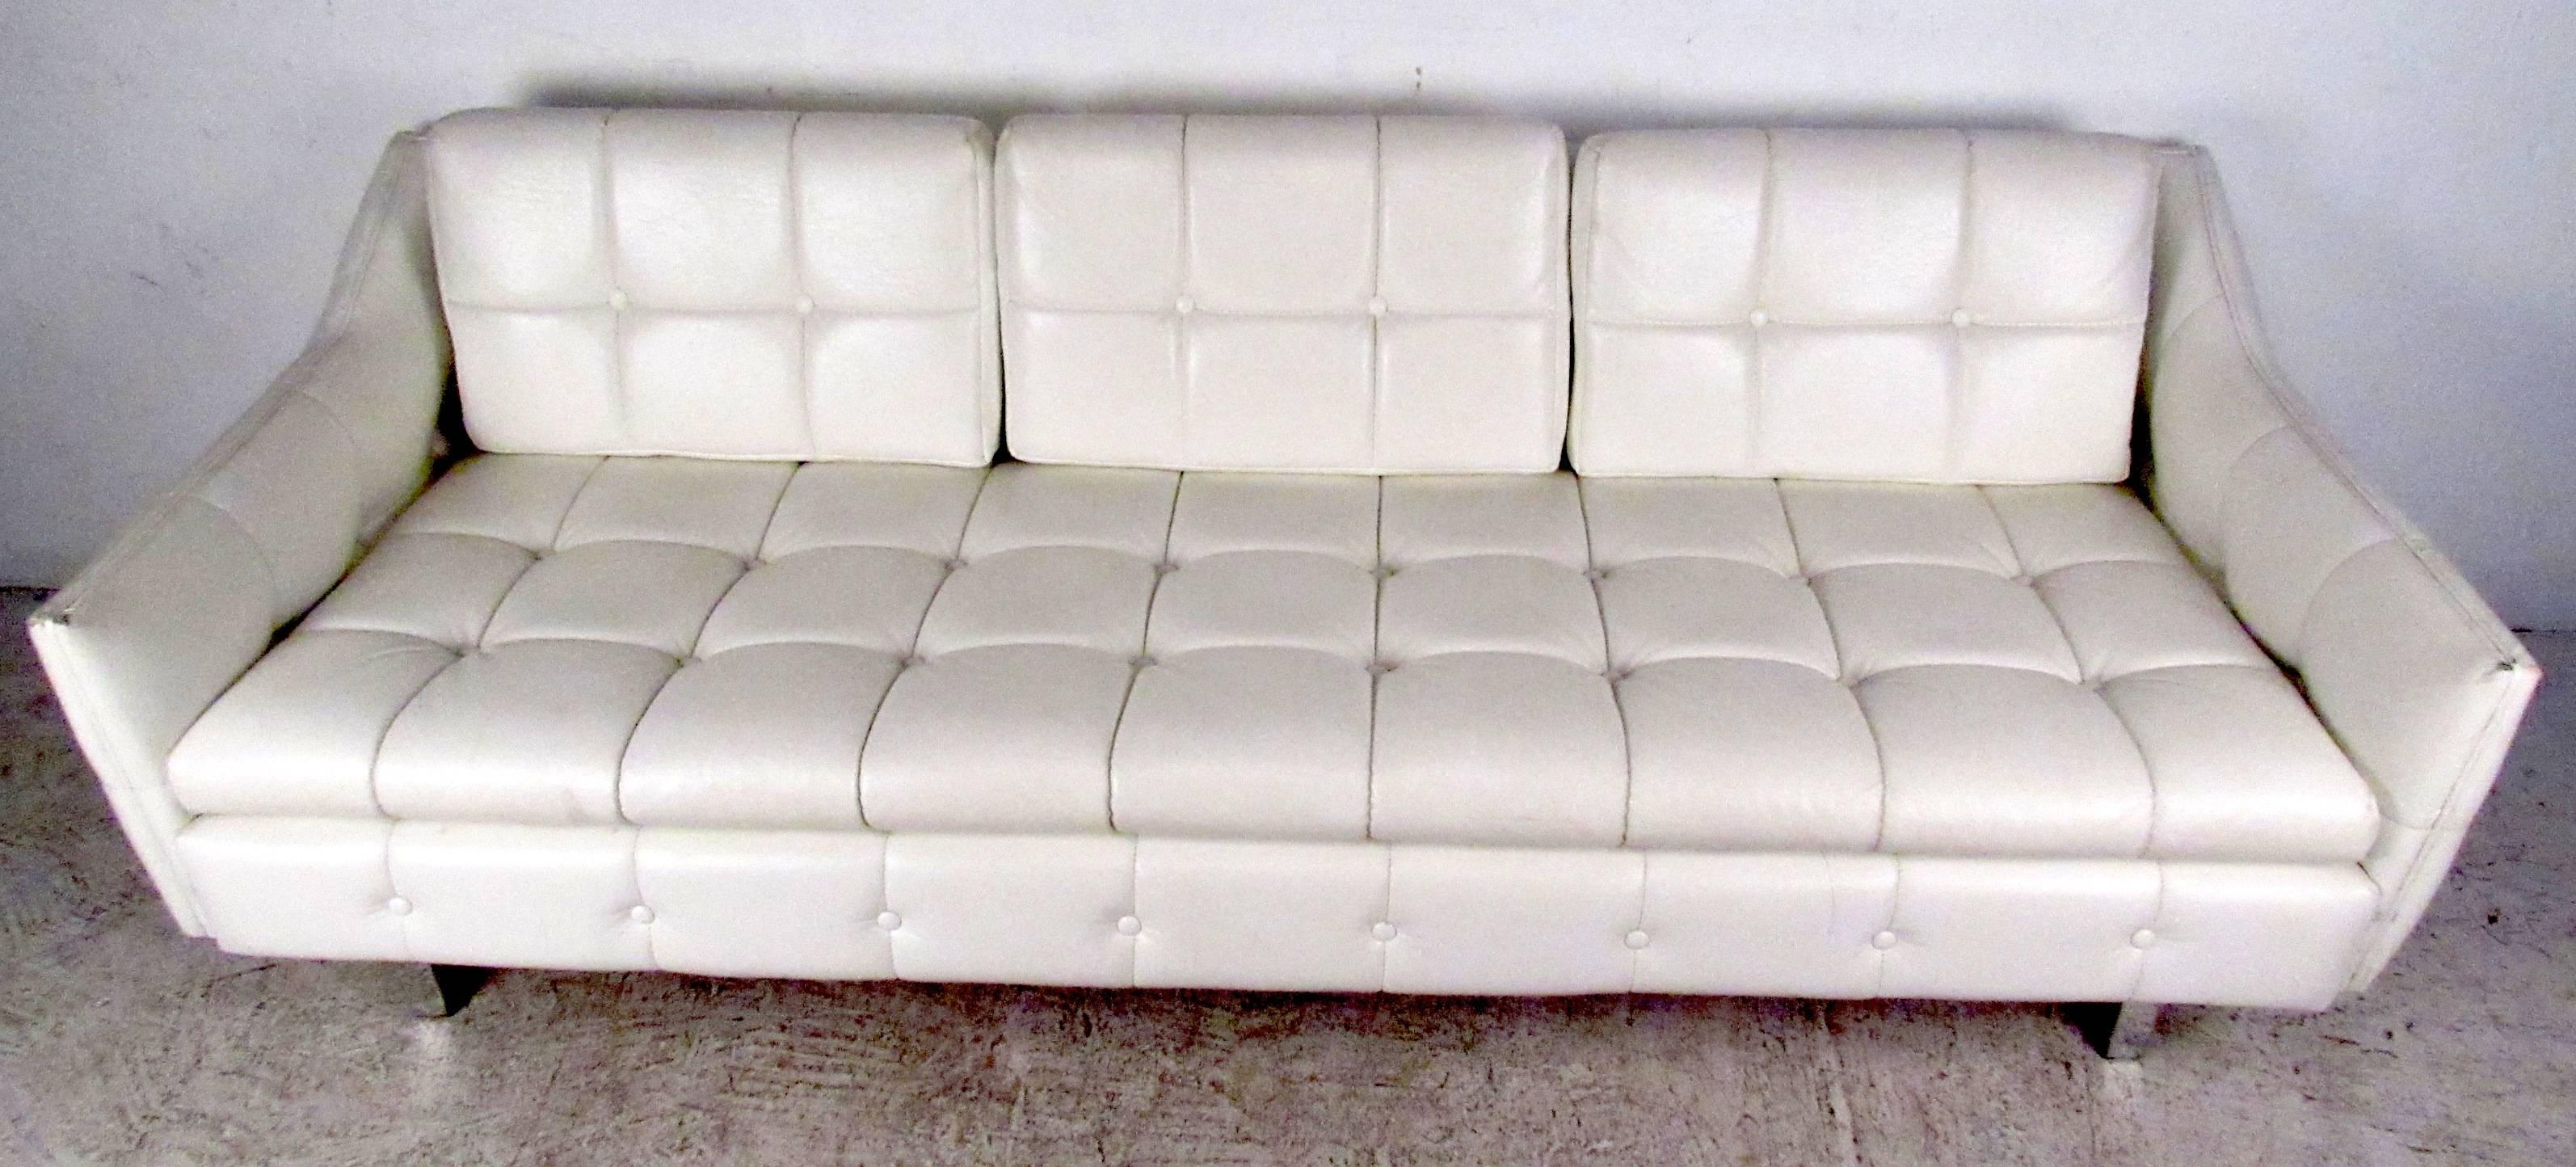 Dreisitziges Sofa mit getuftetem Vinyl (Kunstleder) im Angebot